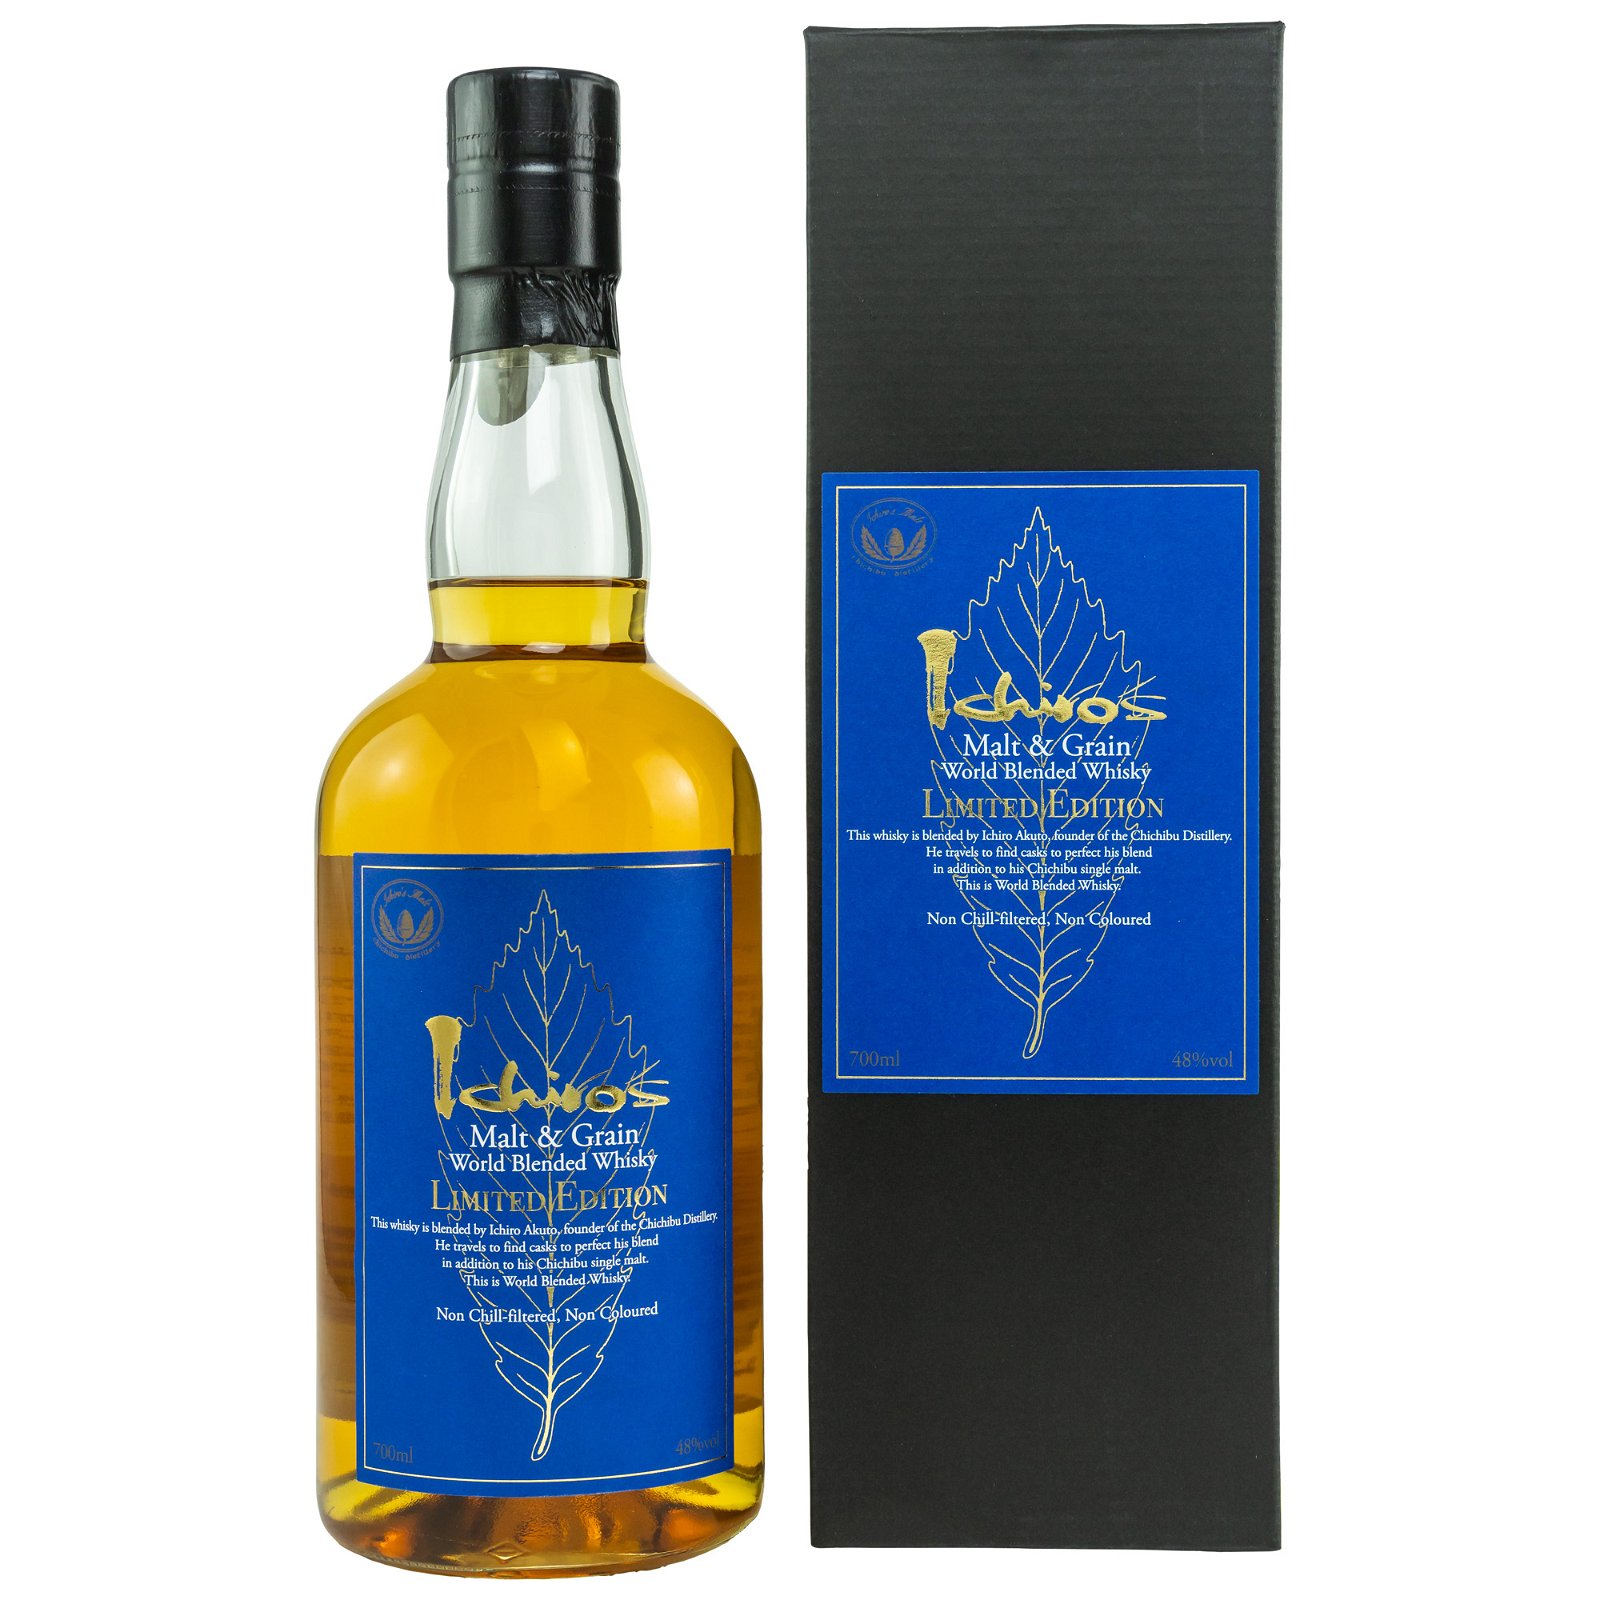 Ichiros Malt & Grain - World Blended Whisky Limited Edition (Japan)